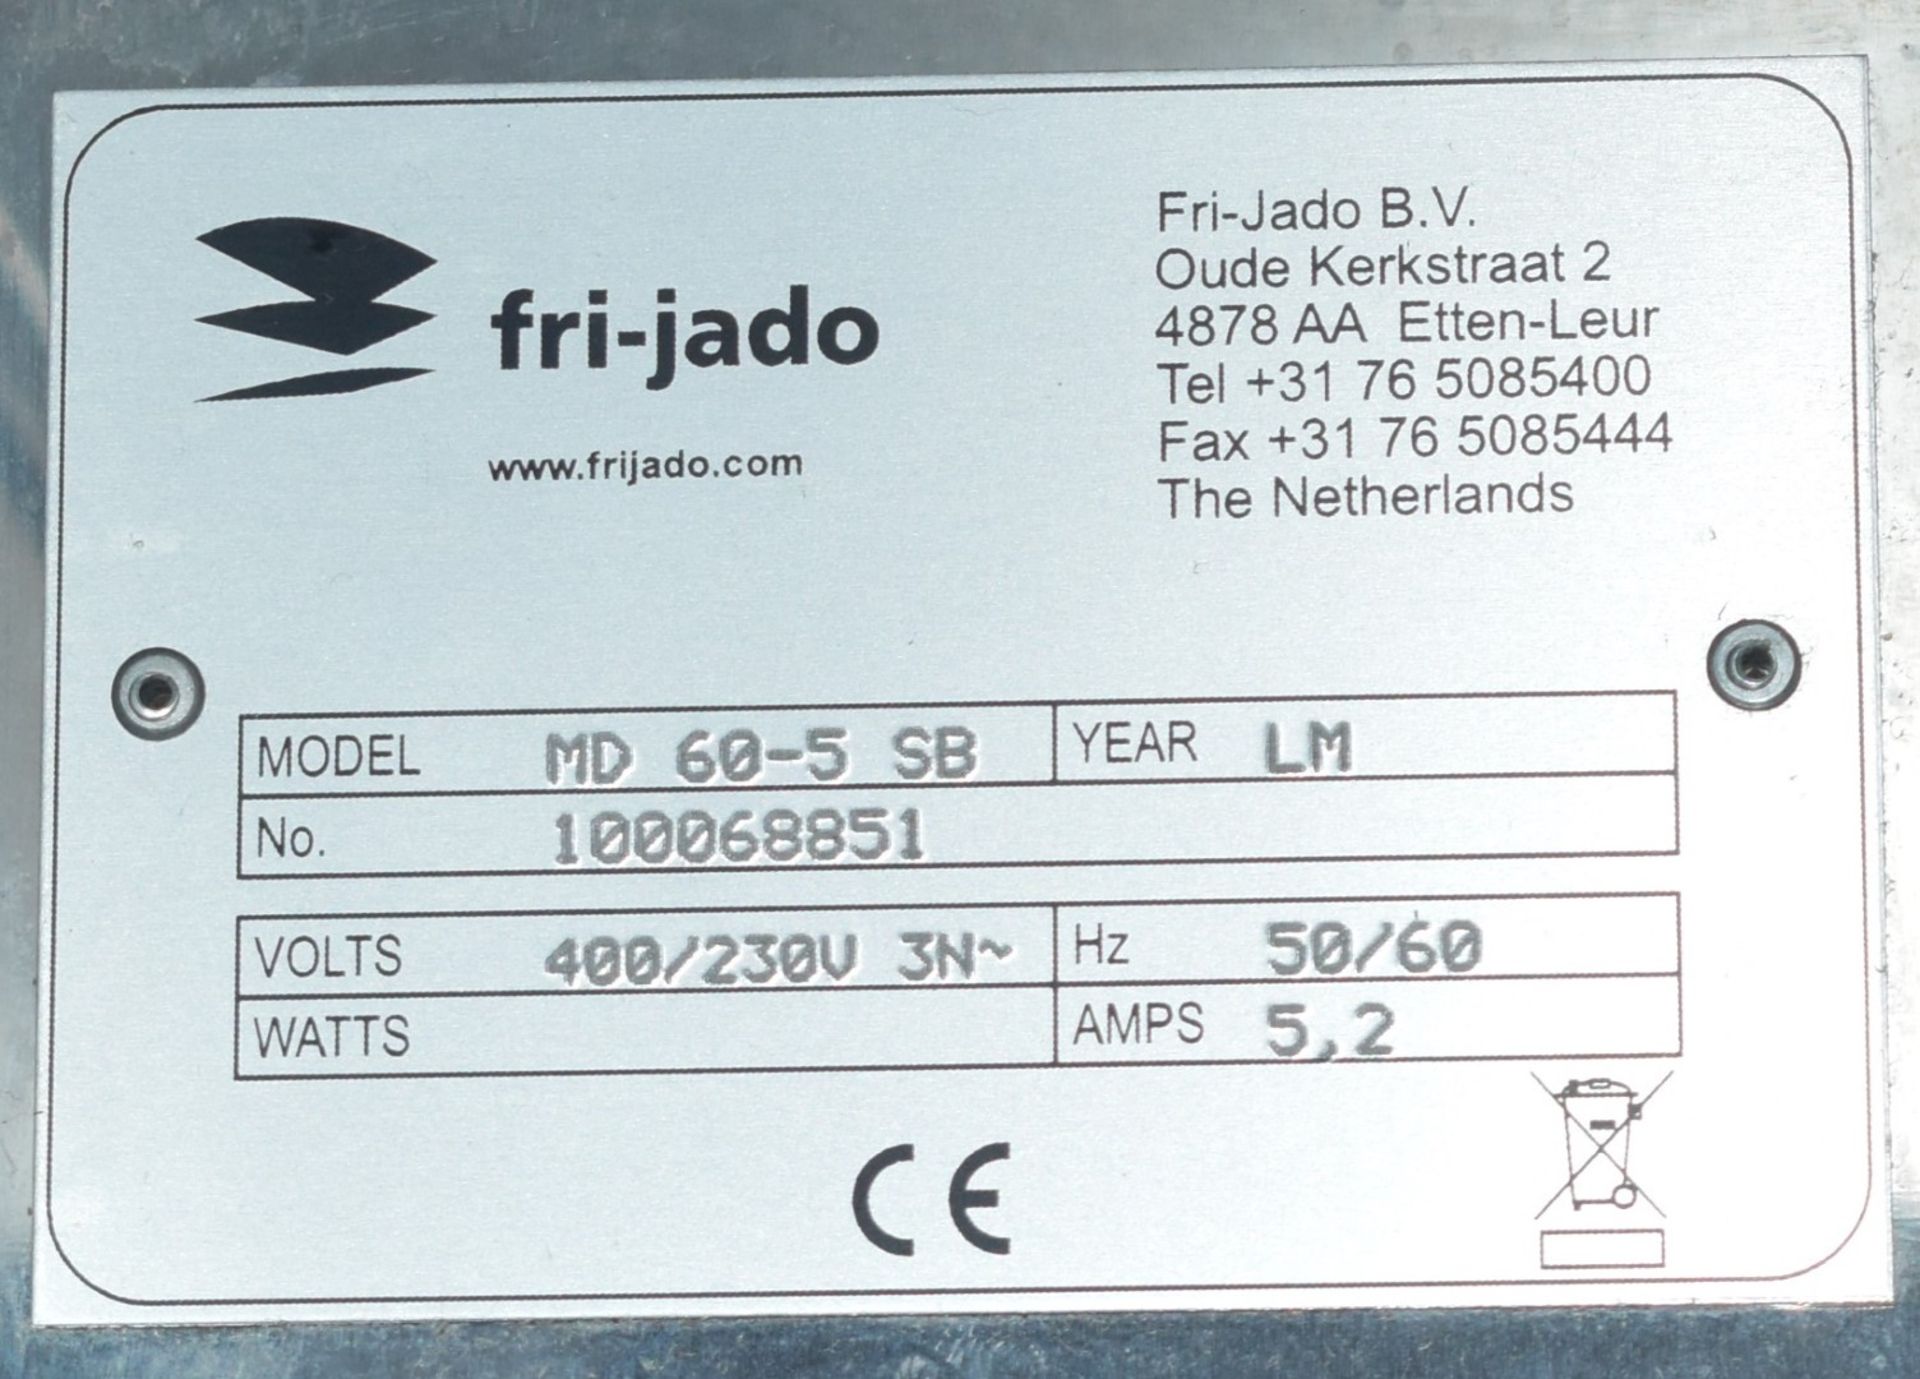 1 x Fri-Jado Four Tier Multi Deck Hot Food Warmer Heated Display Unit - Model MD60-5 SB - - Image 7 of 9